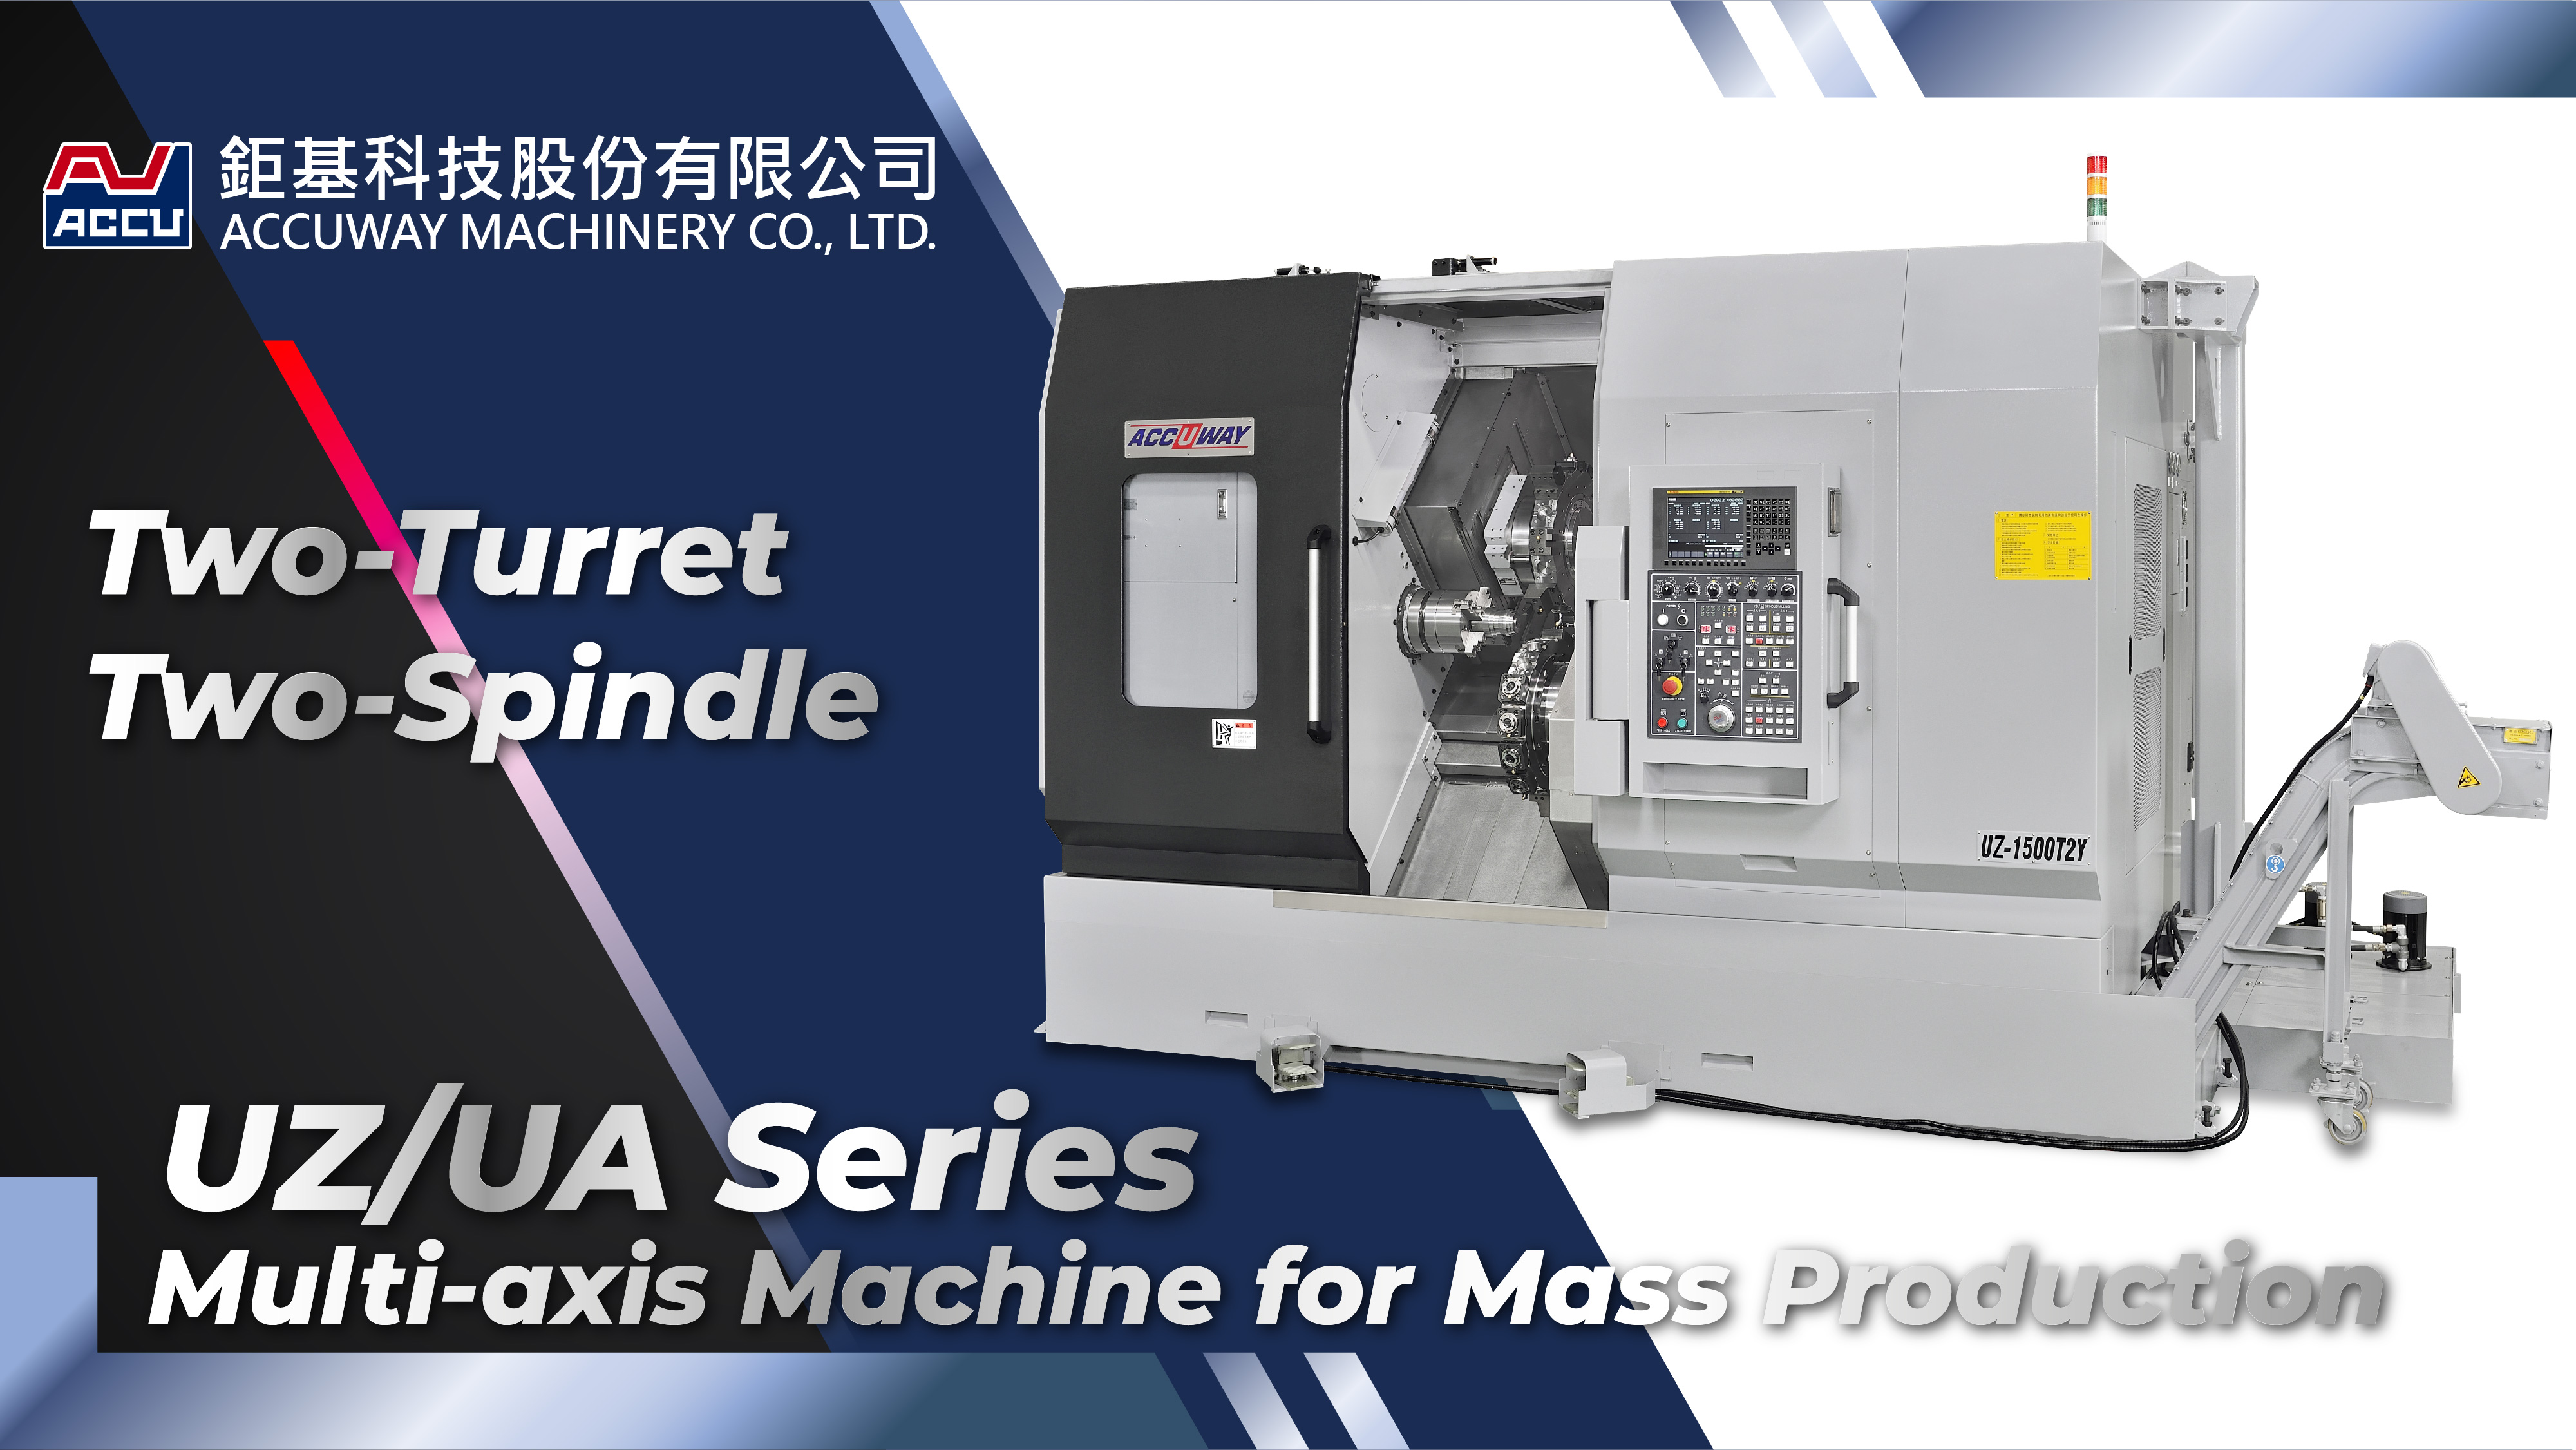 Video|Multi-axis Machine for Mass Production_UZ/UA-1500T2Y | Taiwan Cnc Machine Provider | ACCUWAY